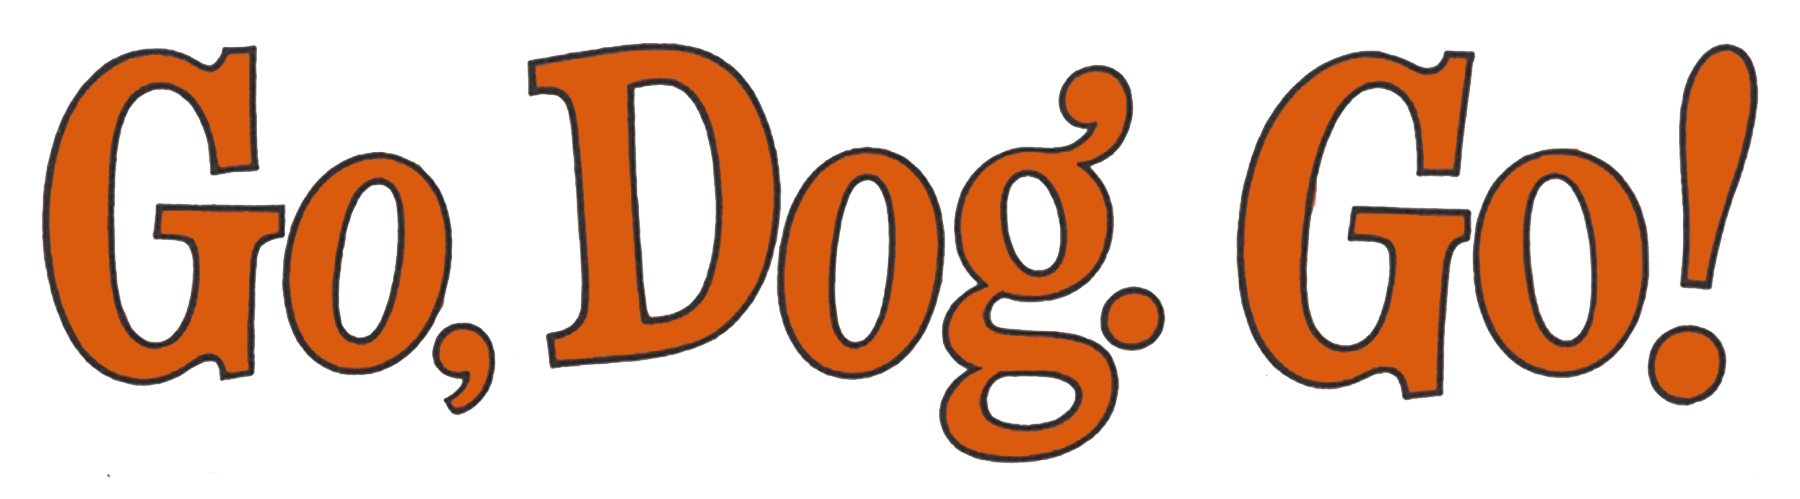 Go Dog Go logo